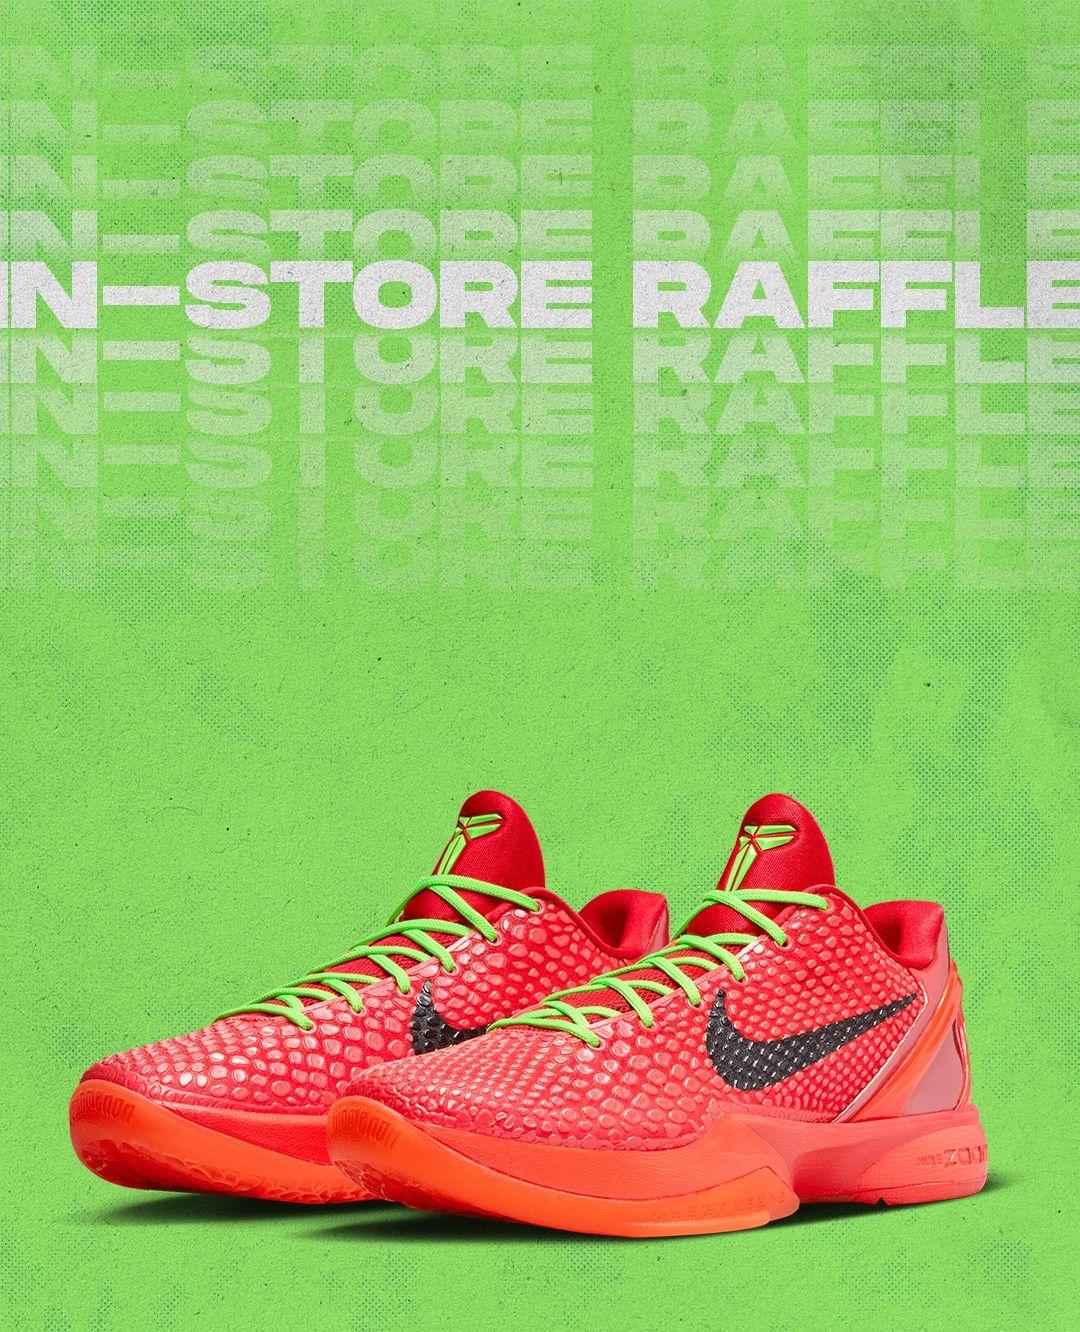 All Points Bulletin On X The Nike Kobe Protro Reverse Grinch